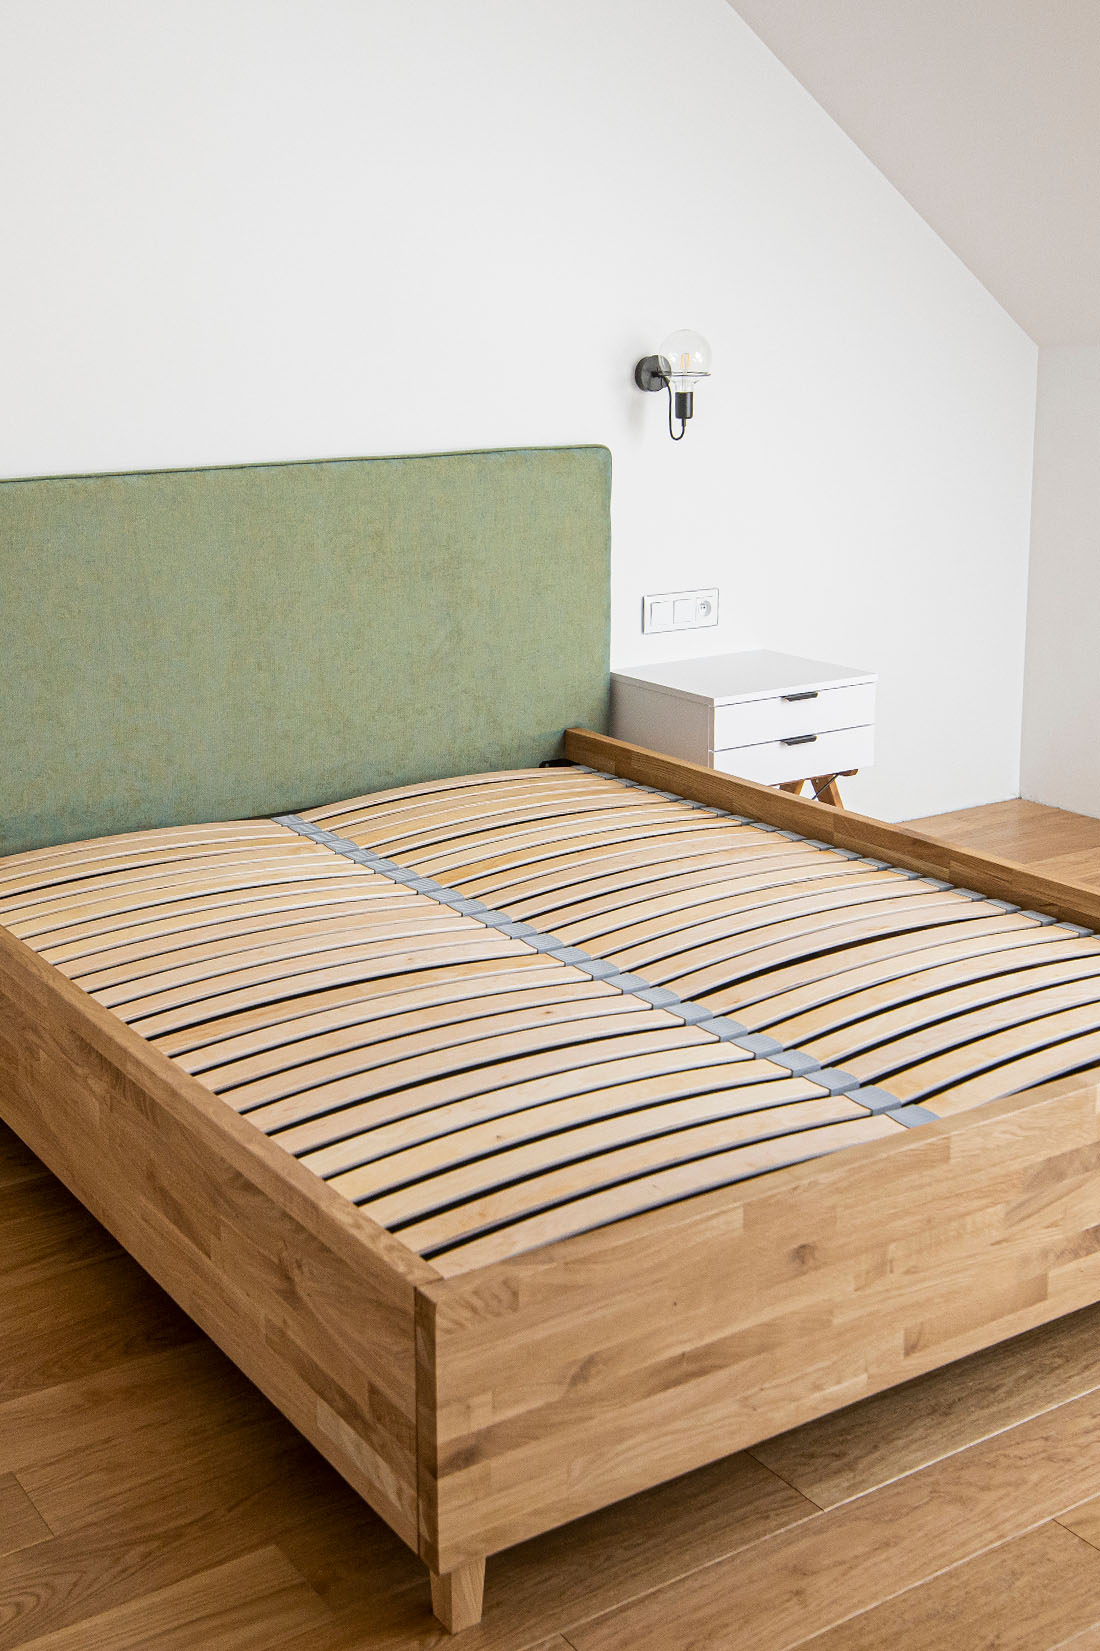 Green upholstered bed for each bedroom